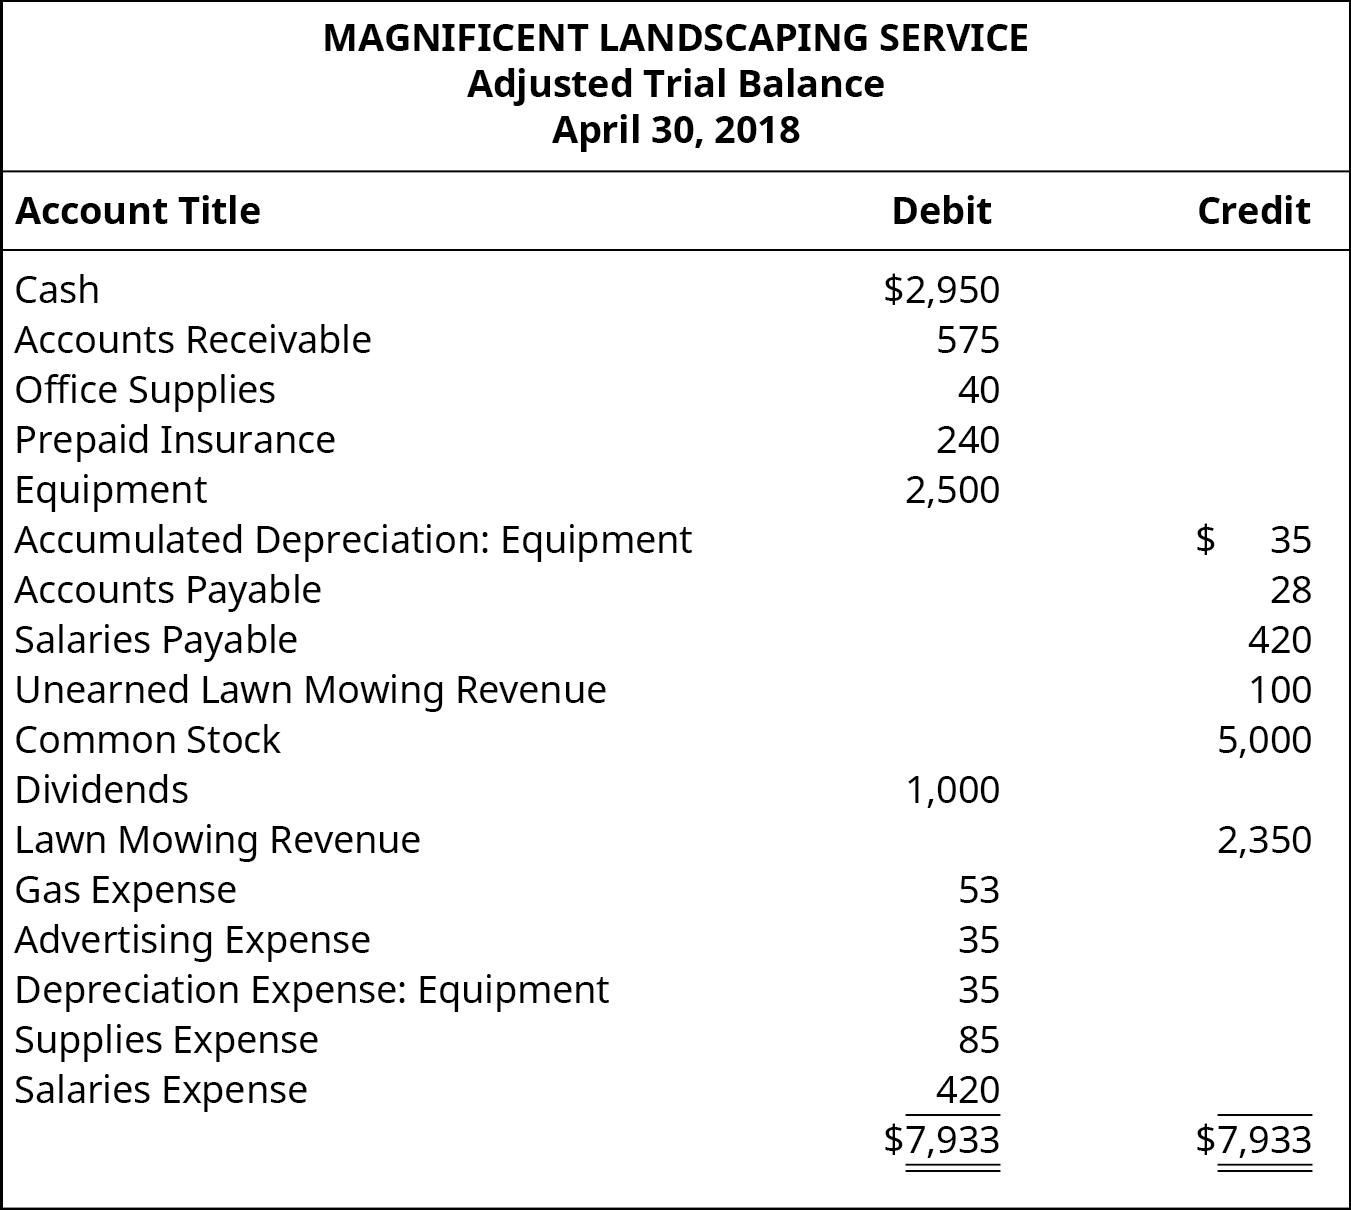 MAGNIFICENT LANDSCAPING SERVICE Adjusted Trial Balance April 30, 2018 Account Title Cash Accounts Receivable